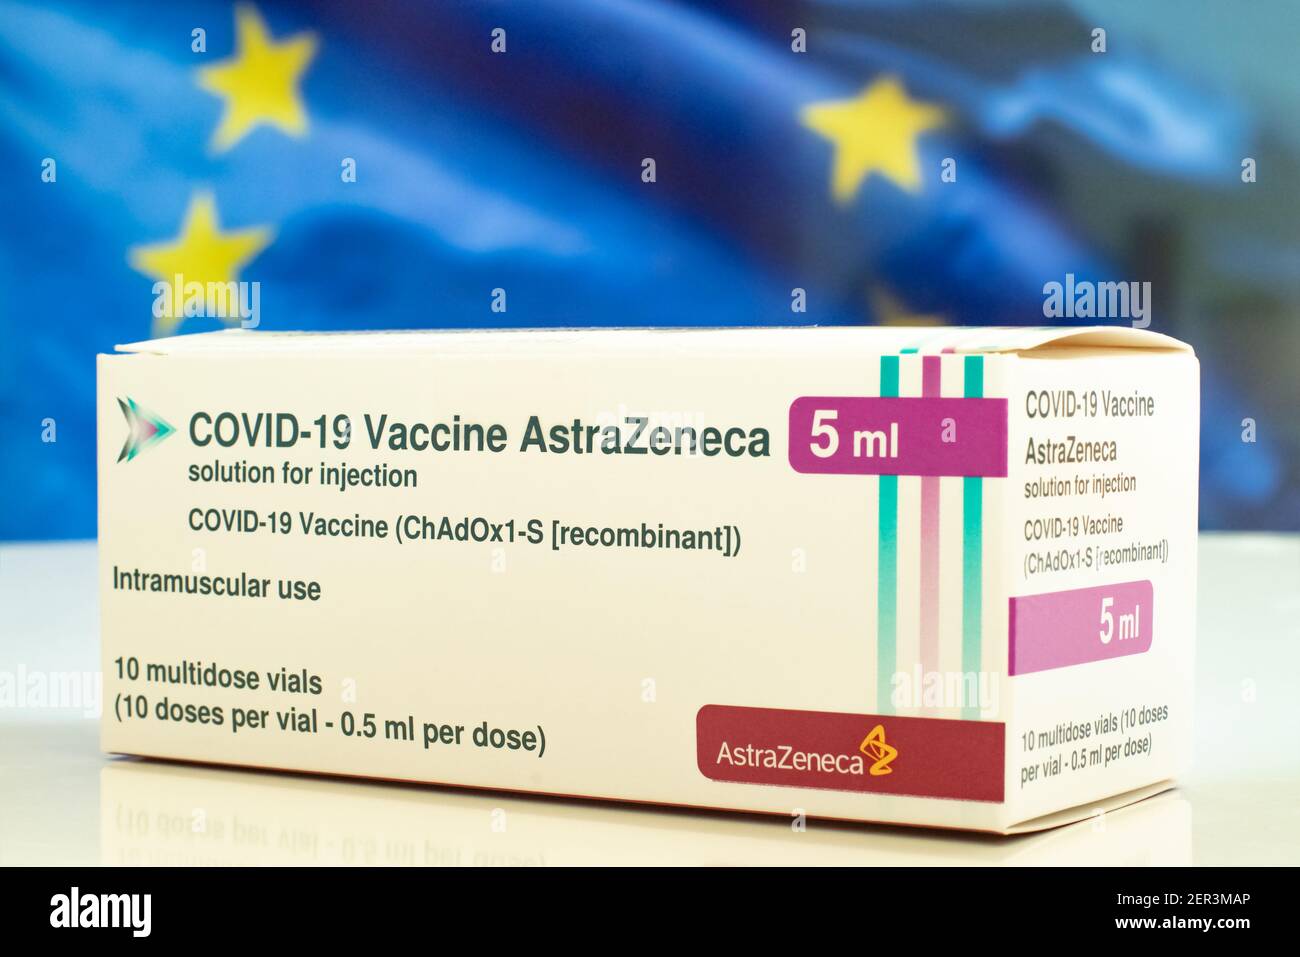 AstraZeneca vaccine. Immunization COVID 19 disease. European Union flag. Worldwide pandemic vaccination with the Astra Zeneca vaccine Stock Photo